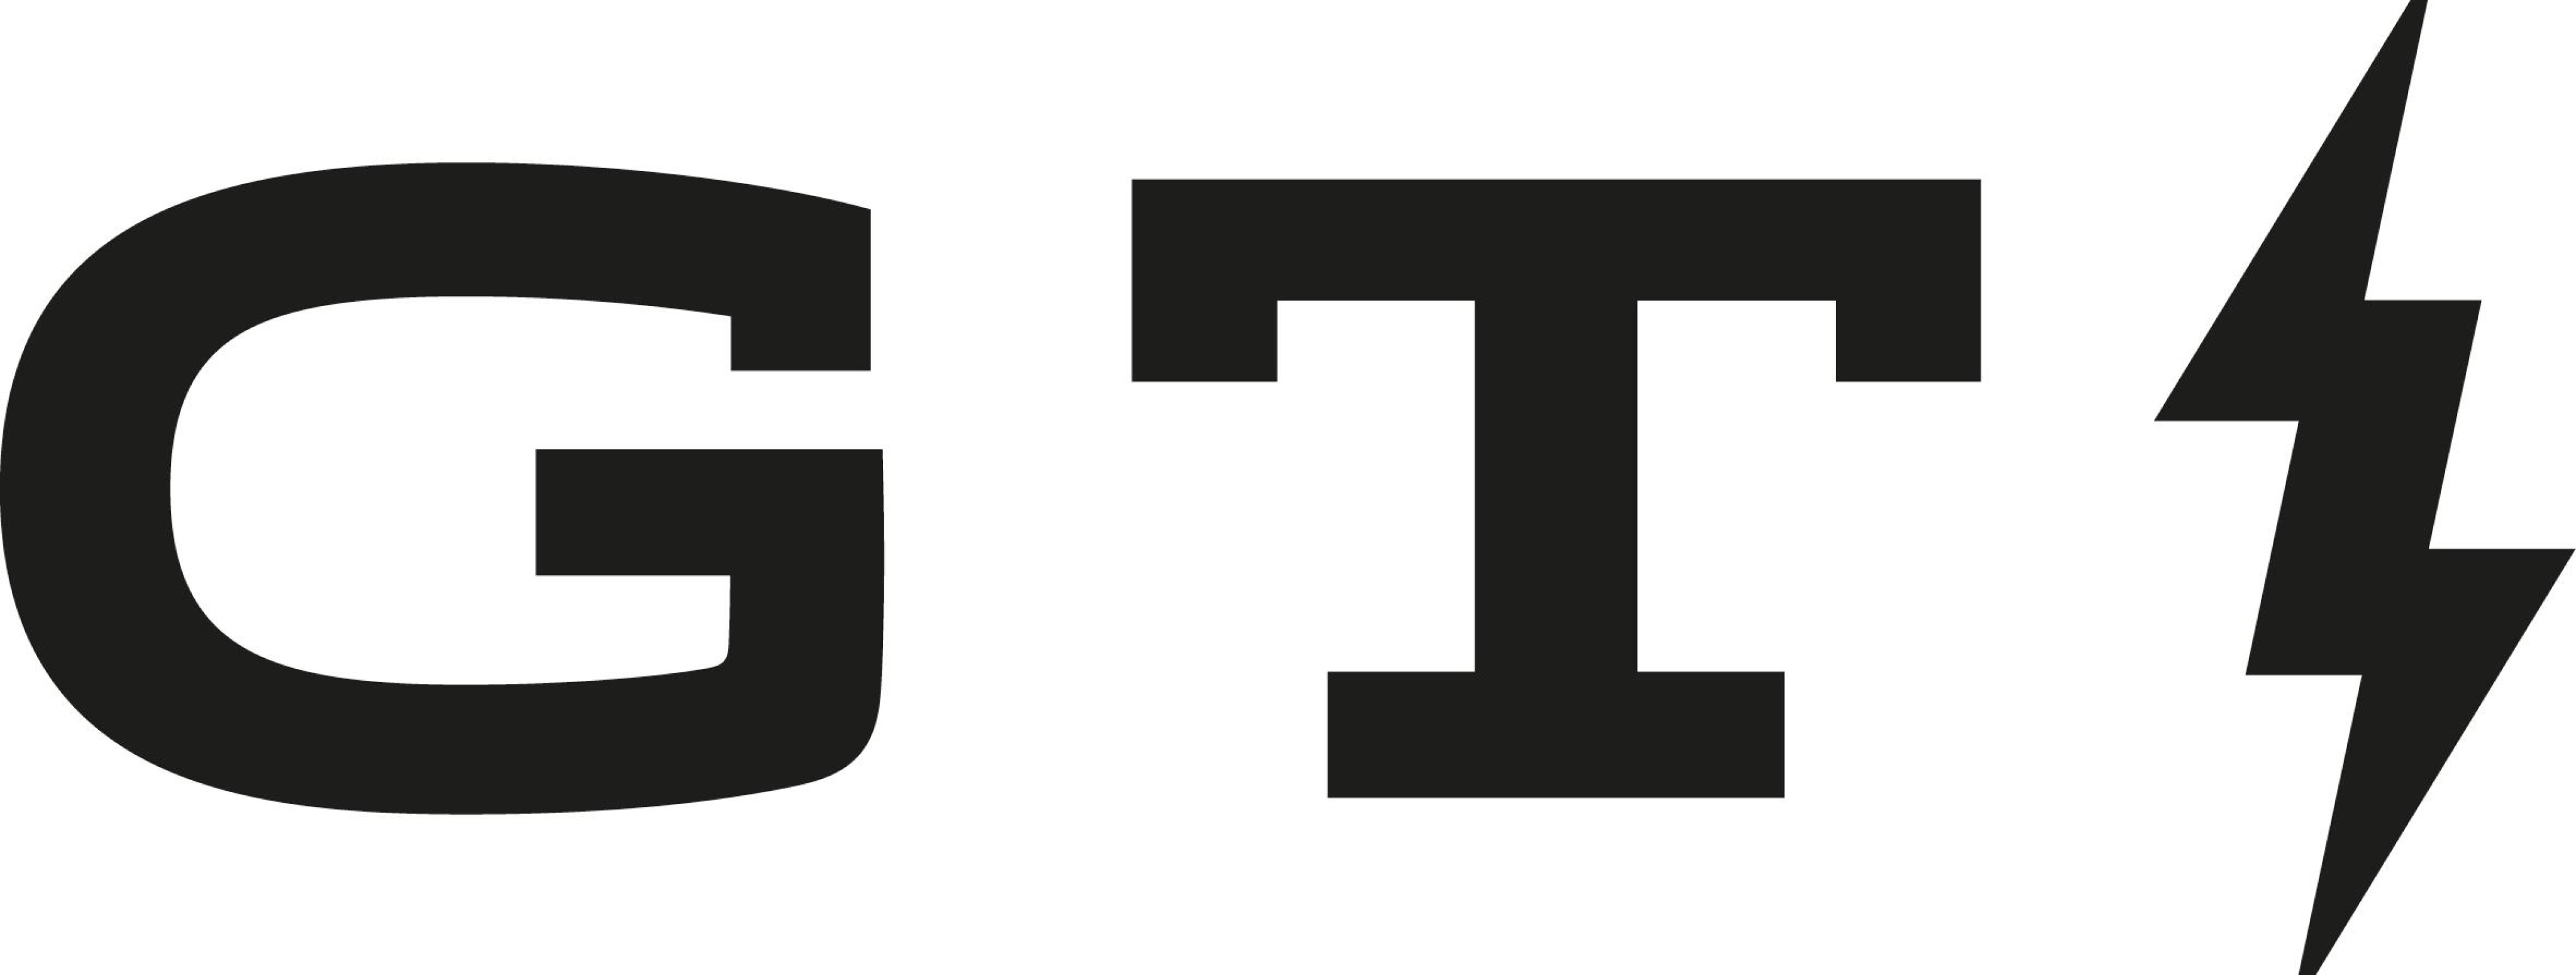 d67118b4/volkswagen gti electric logo trademark 1 8 23 jpeg